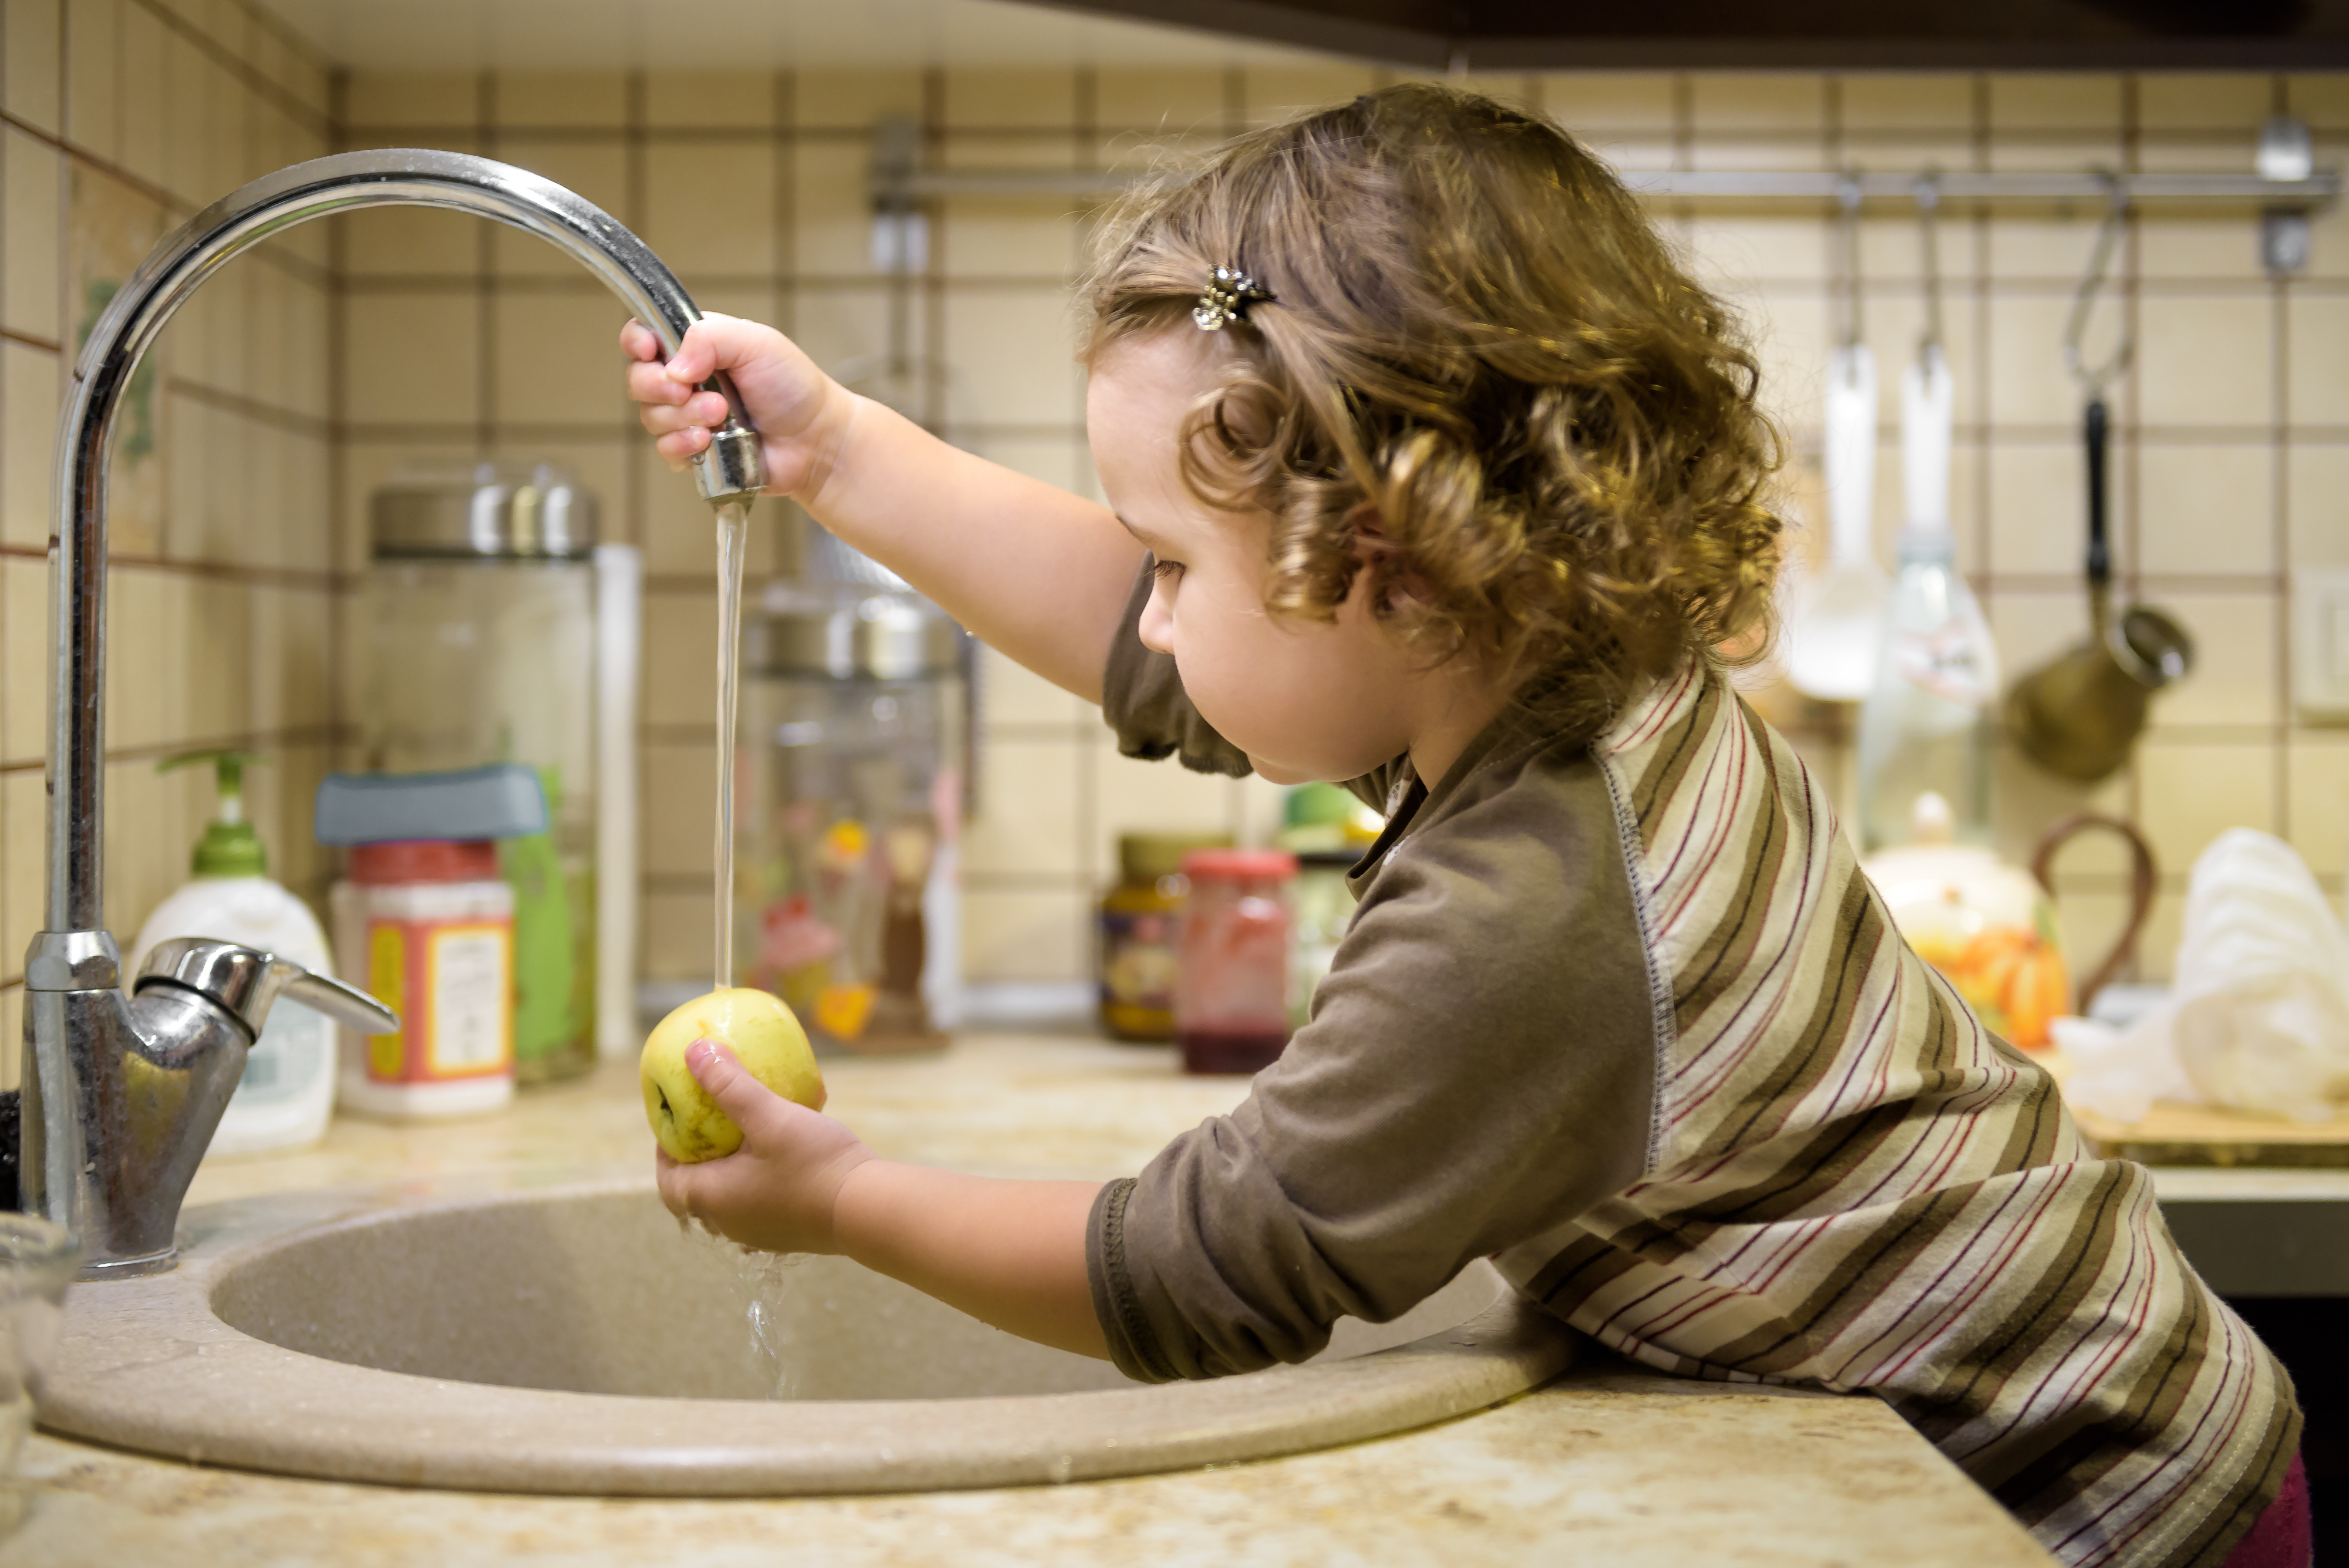 Child using sink